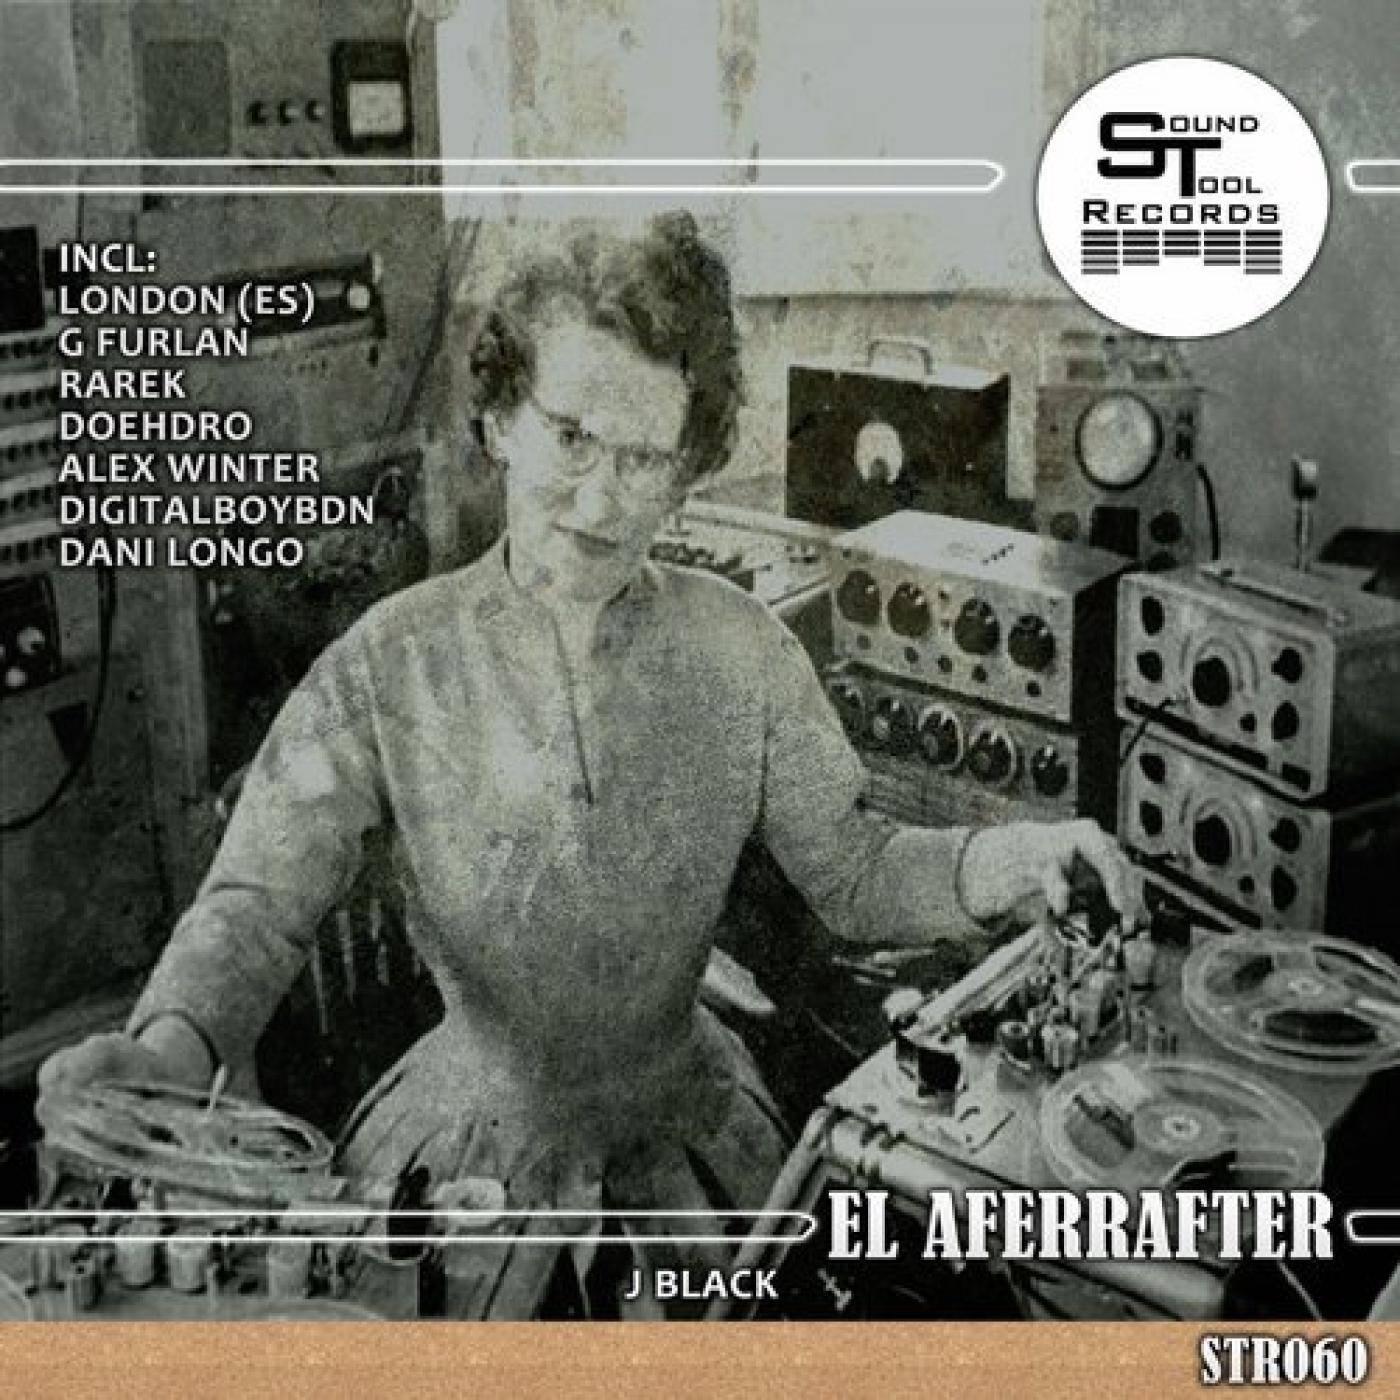 El Aferrafter (London's Atmospheric Dub)